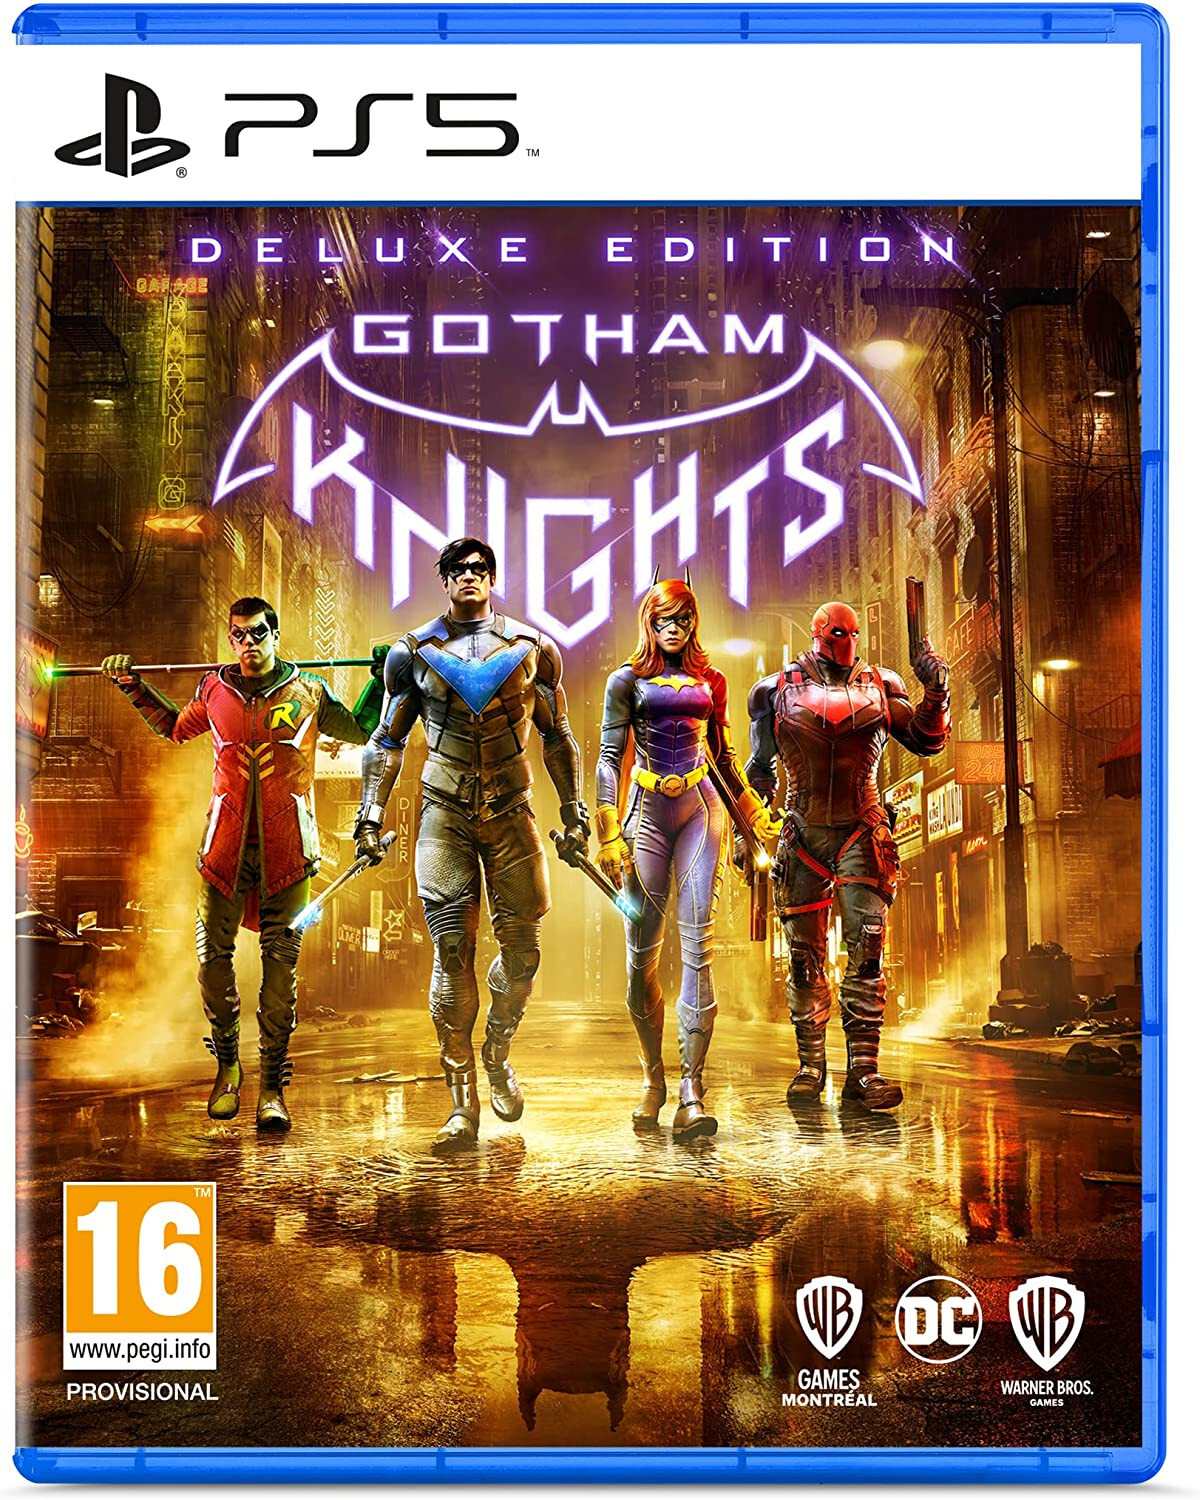 Warner Bros. Interactive gotham knights deluxe edition PlayStation 5